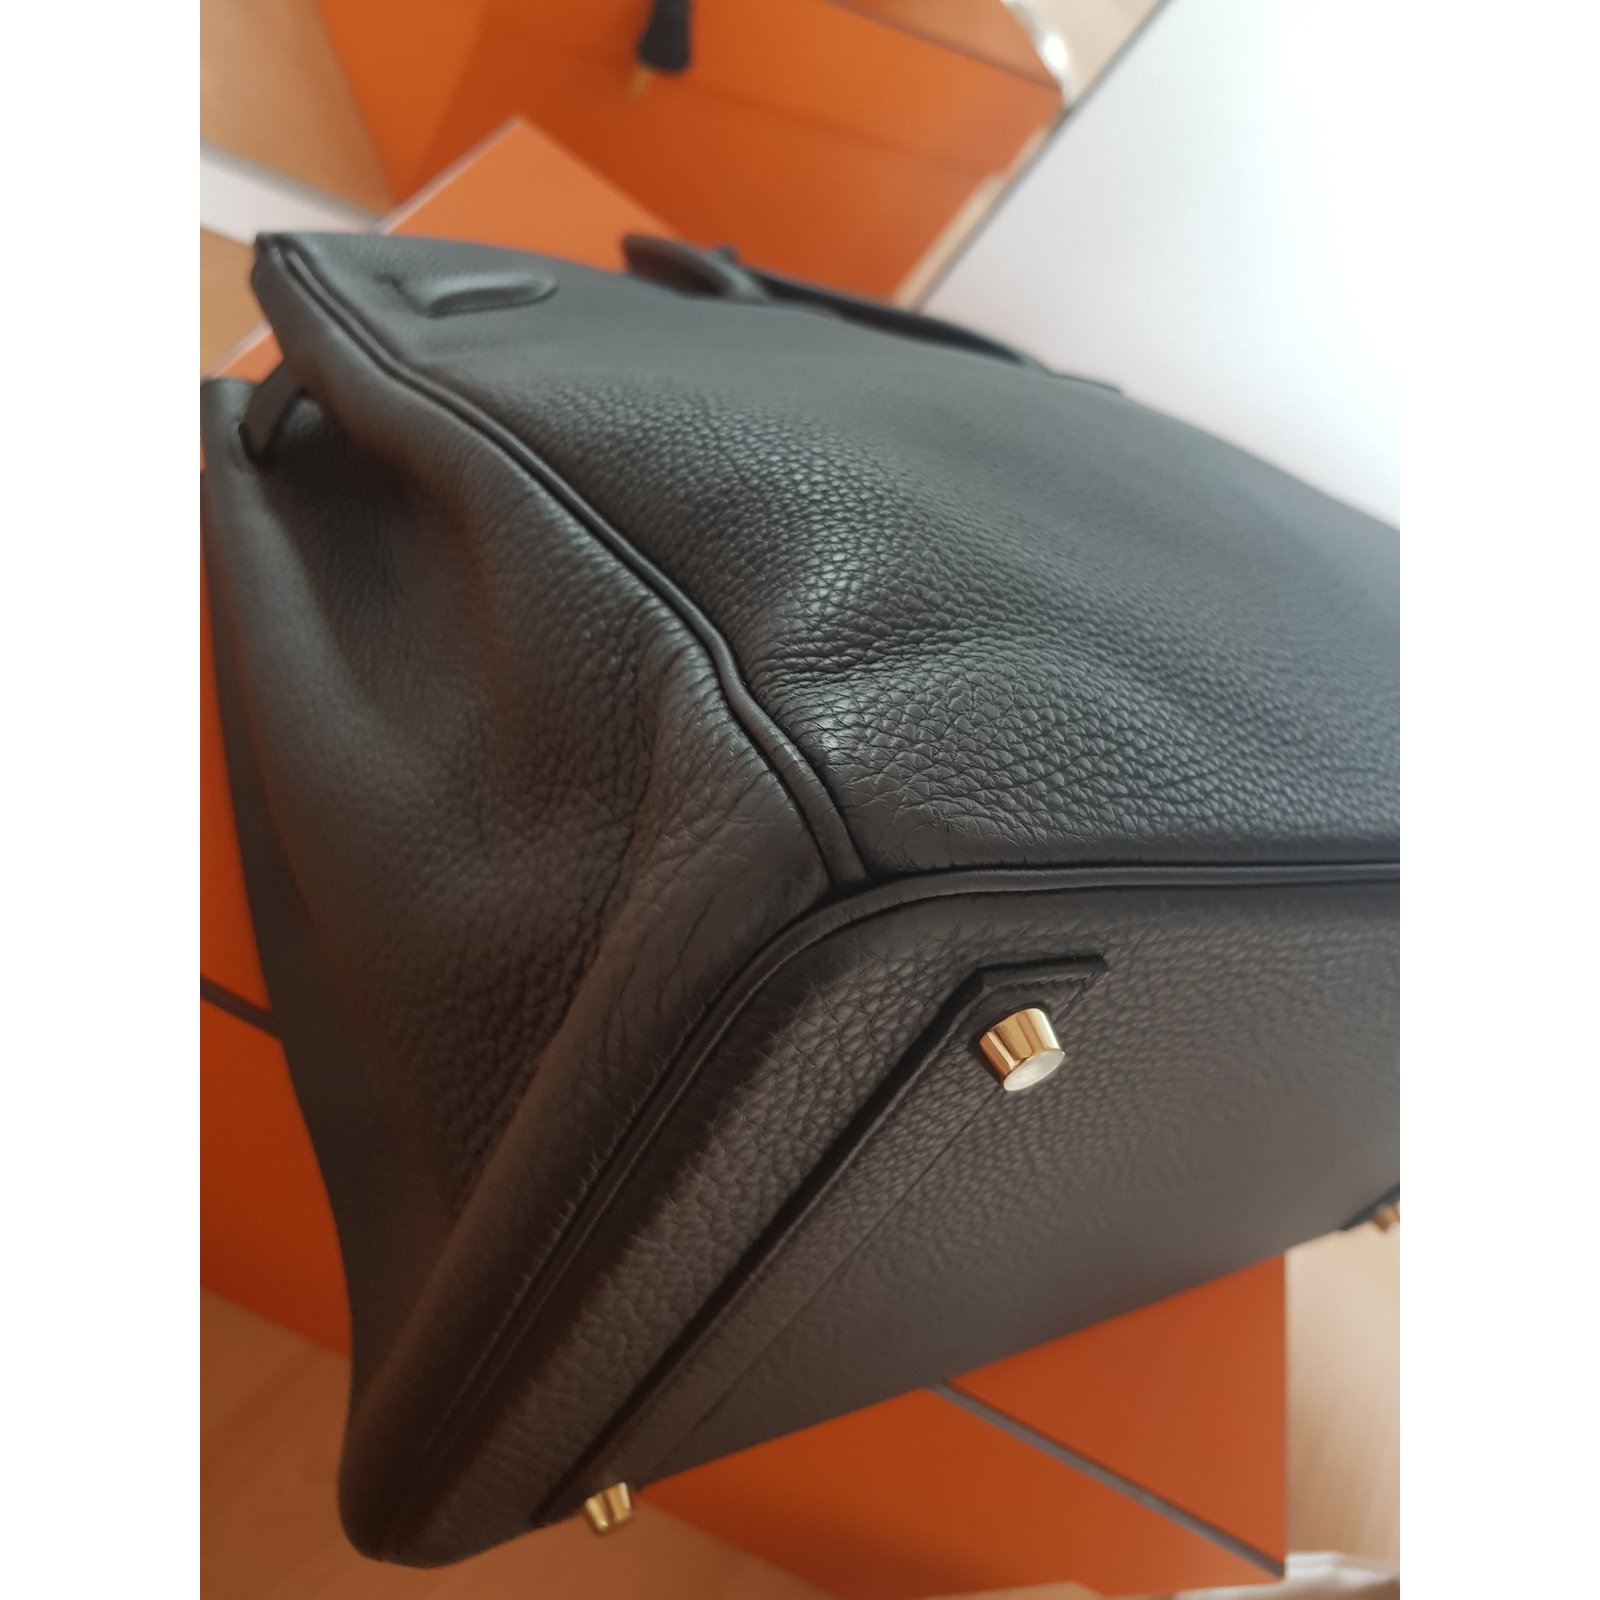 Sold at Auction: Hermès 2016 40cm 'Birkin' in Black Togo Leather